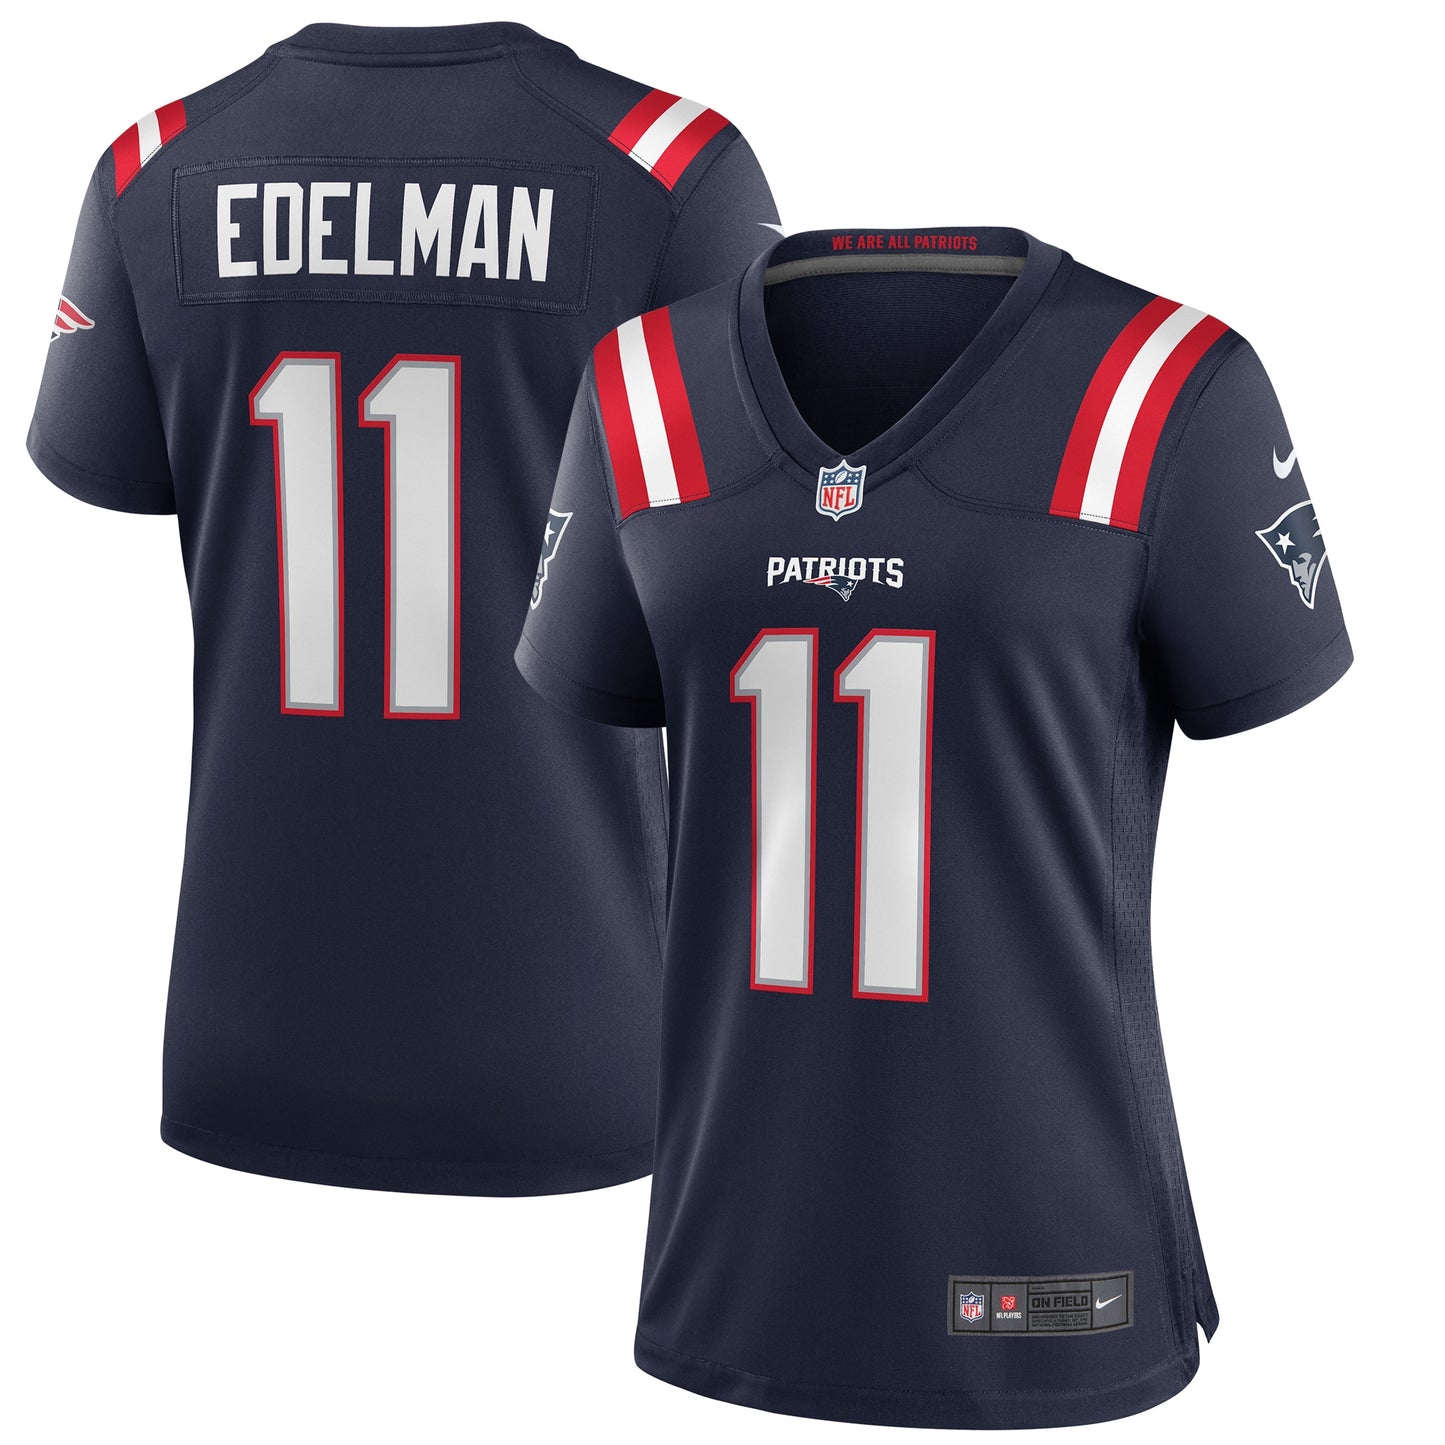 Julian Edelman New England Patriots Nike Women's Game Jersey - Navy